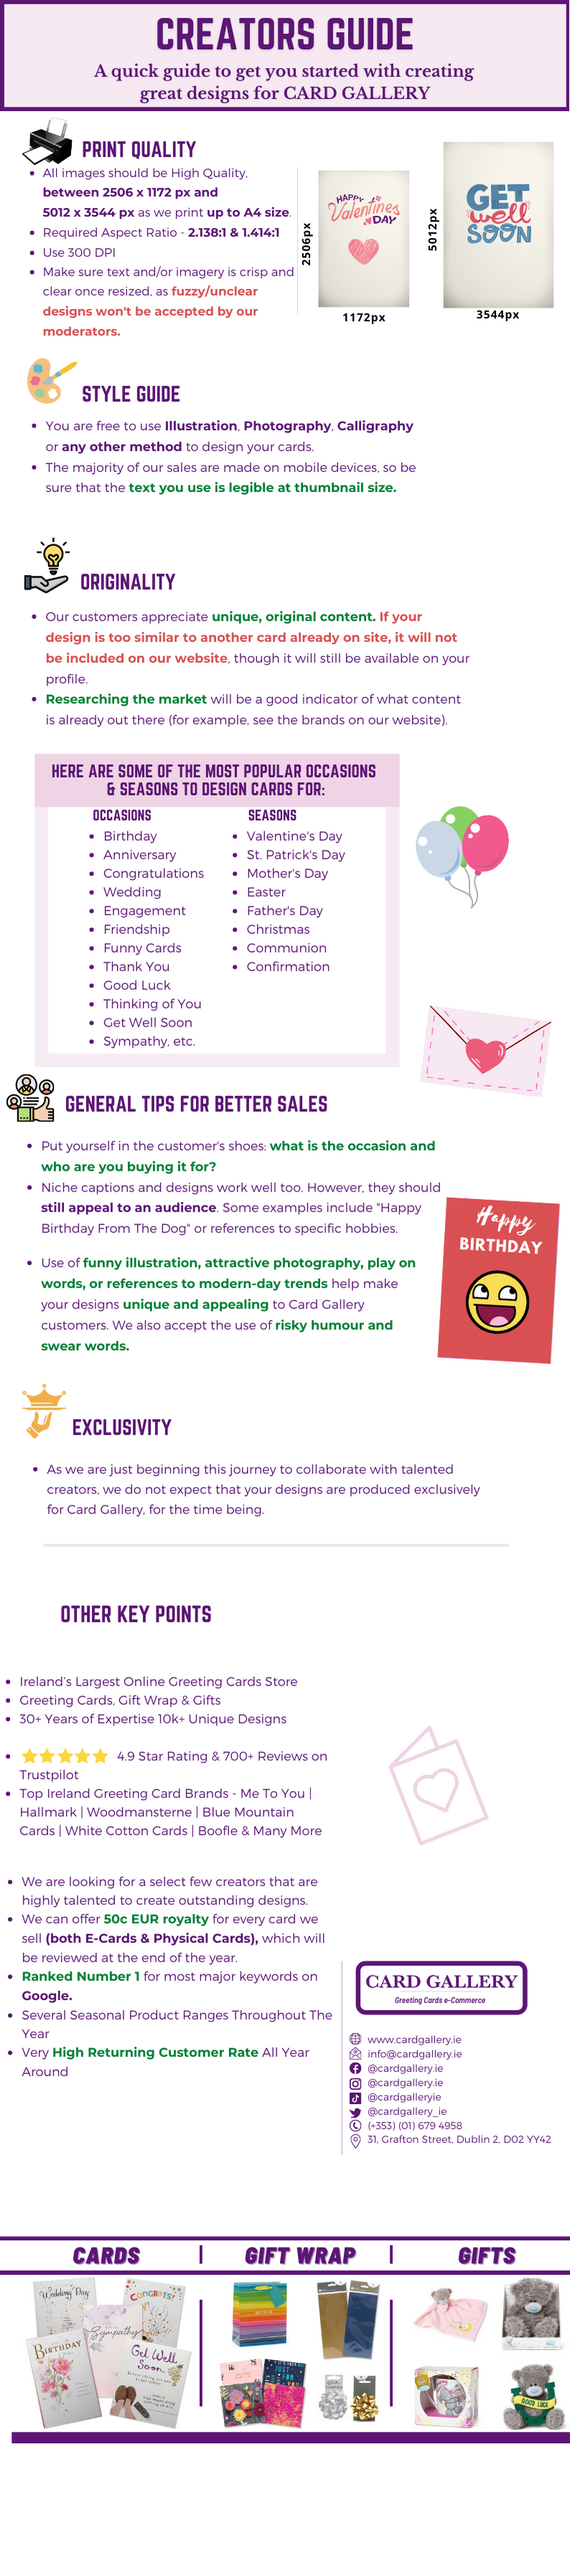 Card Gallery Creators Guide